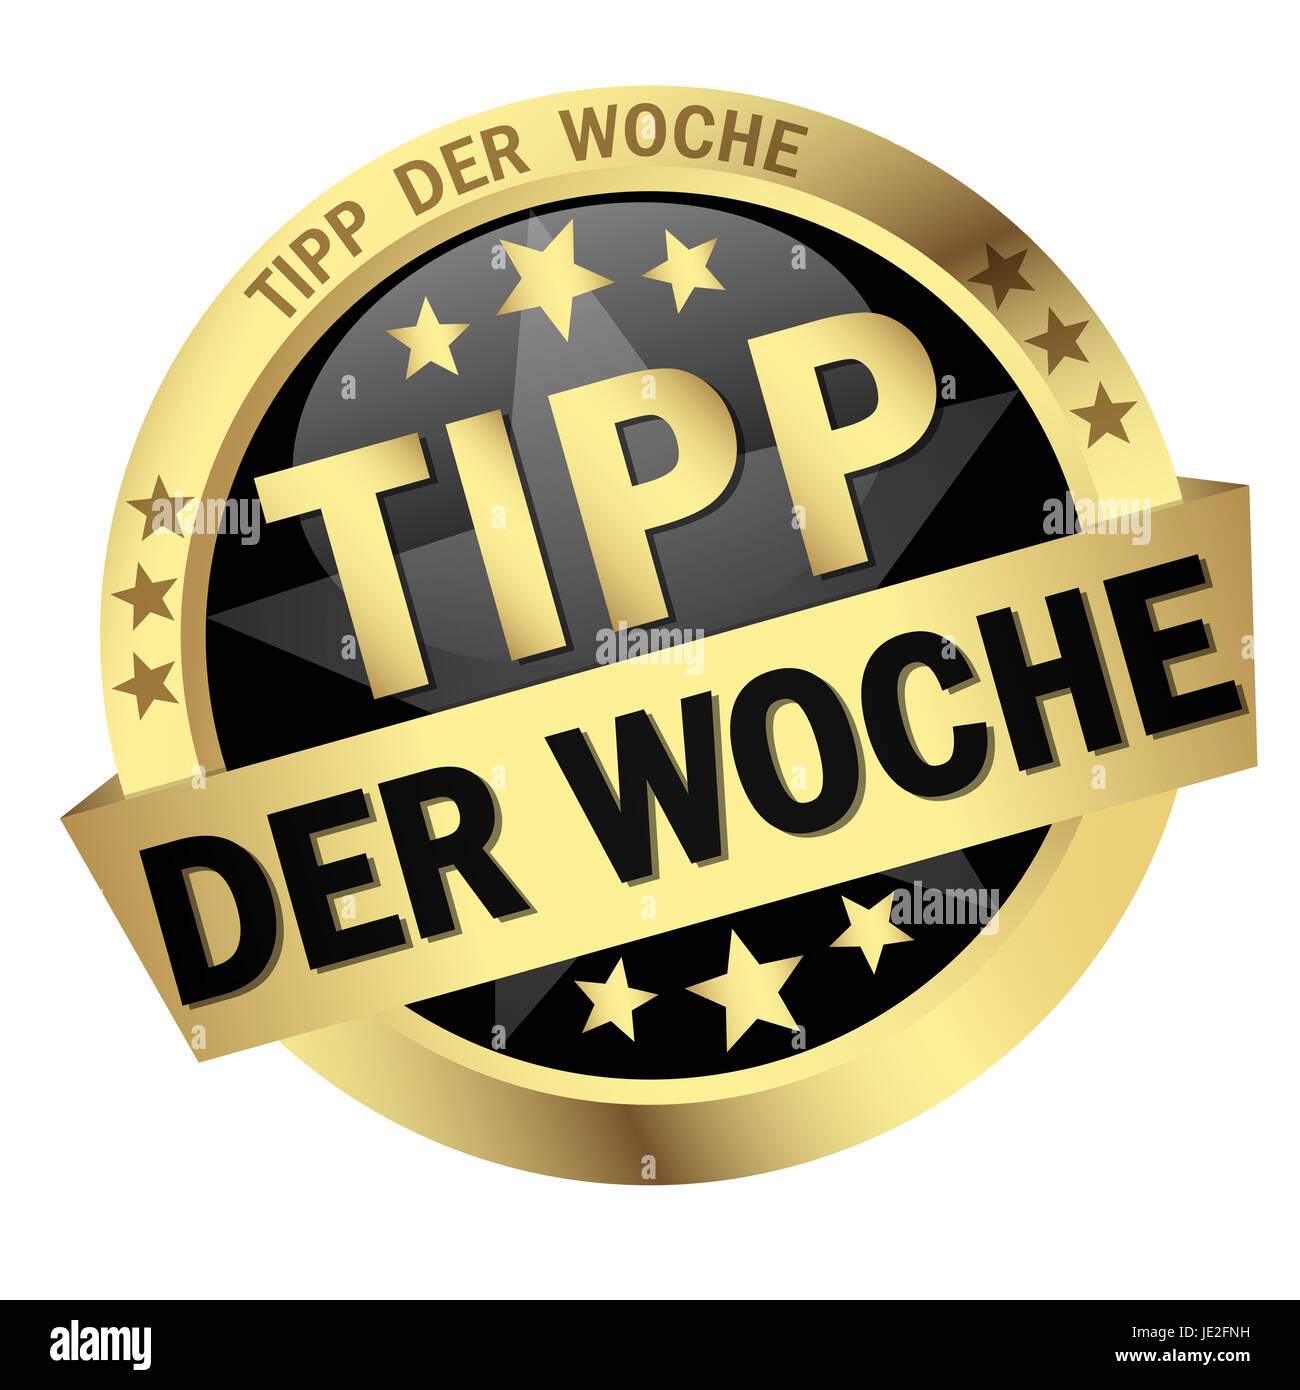 Button with banner - Tipp der Woche Stock Photo